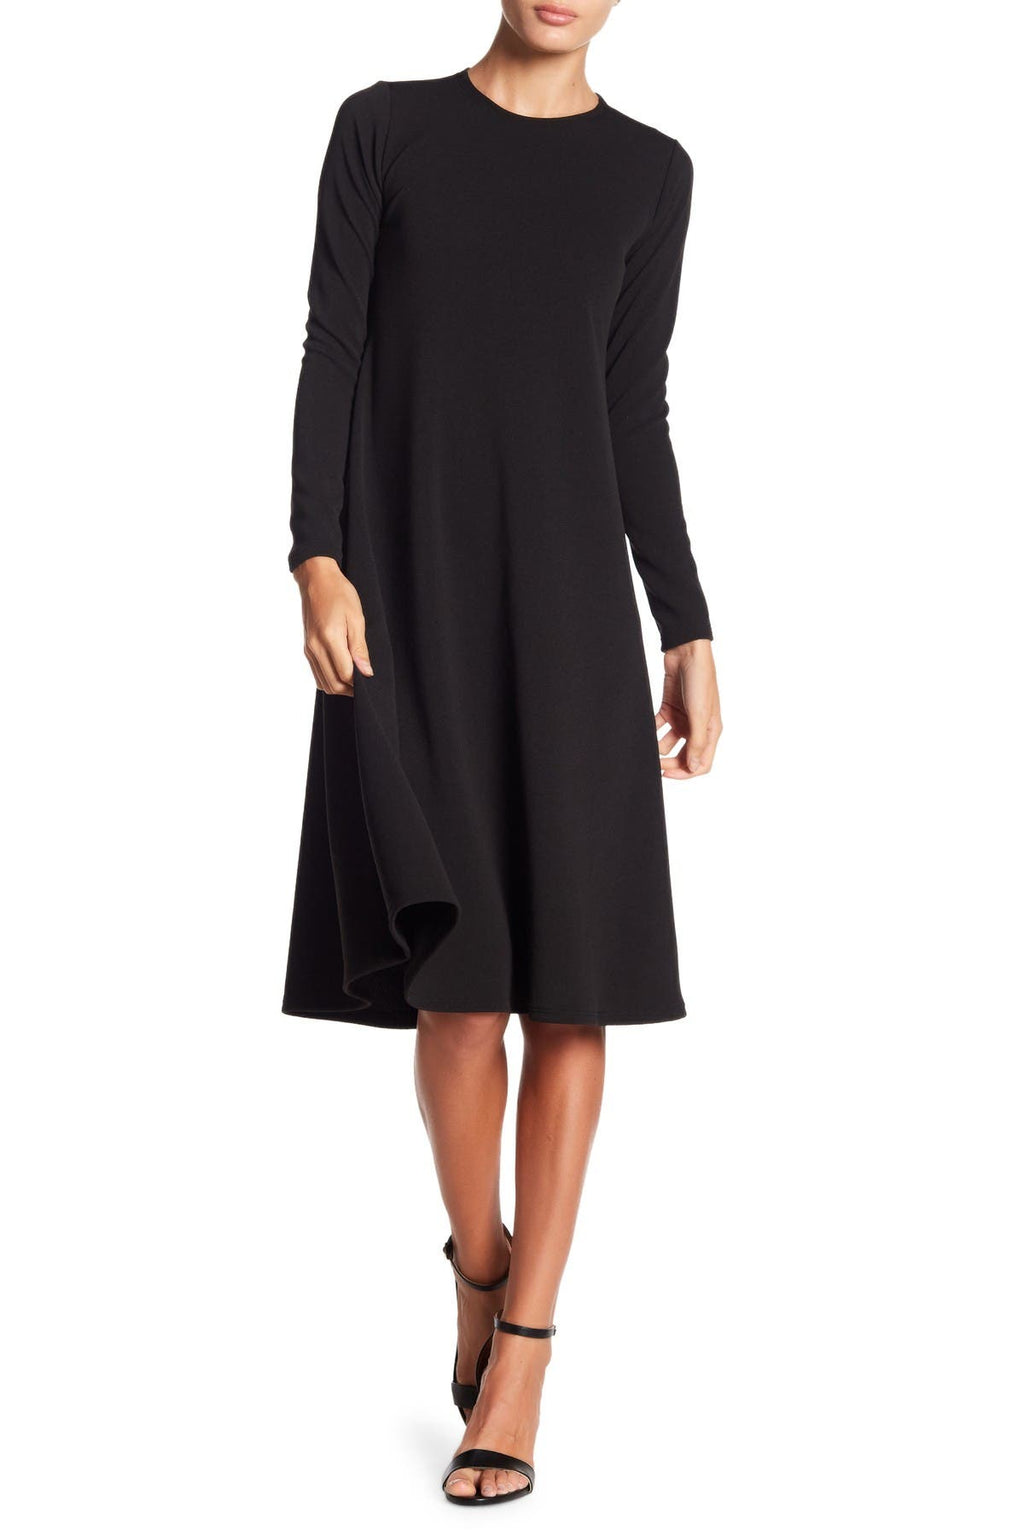 GO COUTURE Long Sleeve A-Line Dress, Main, color, BLACK CREP